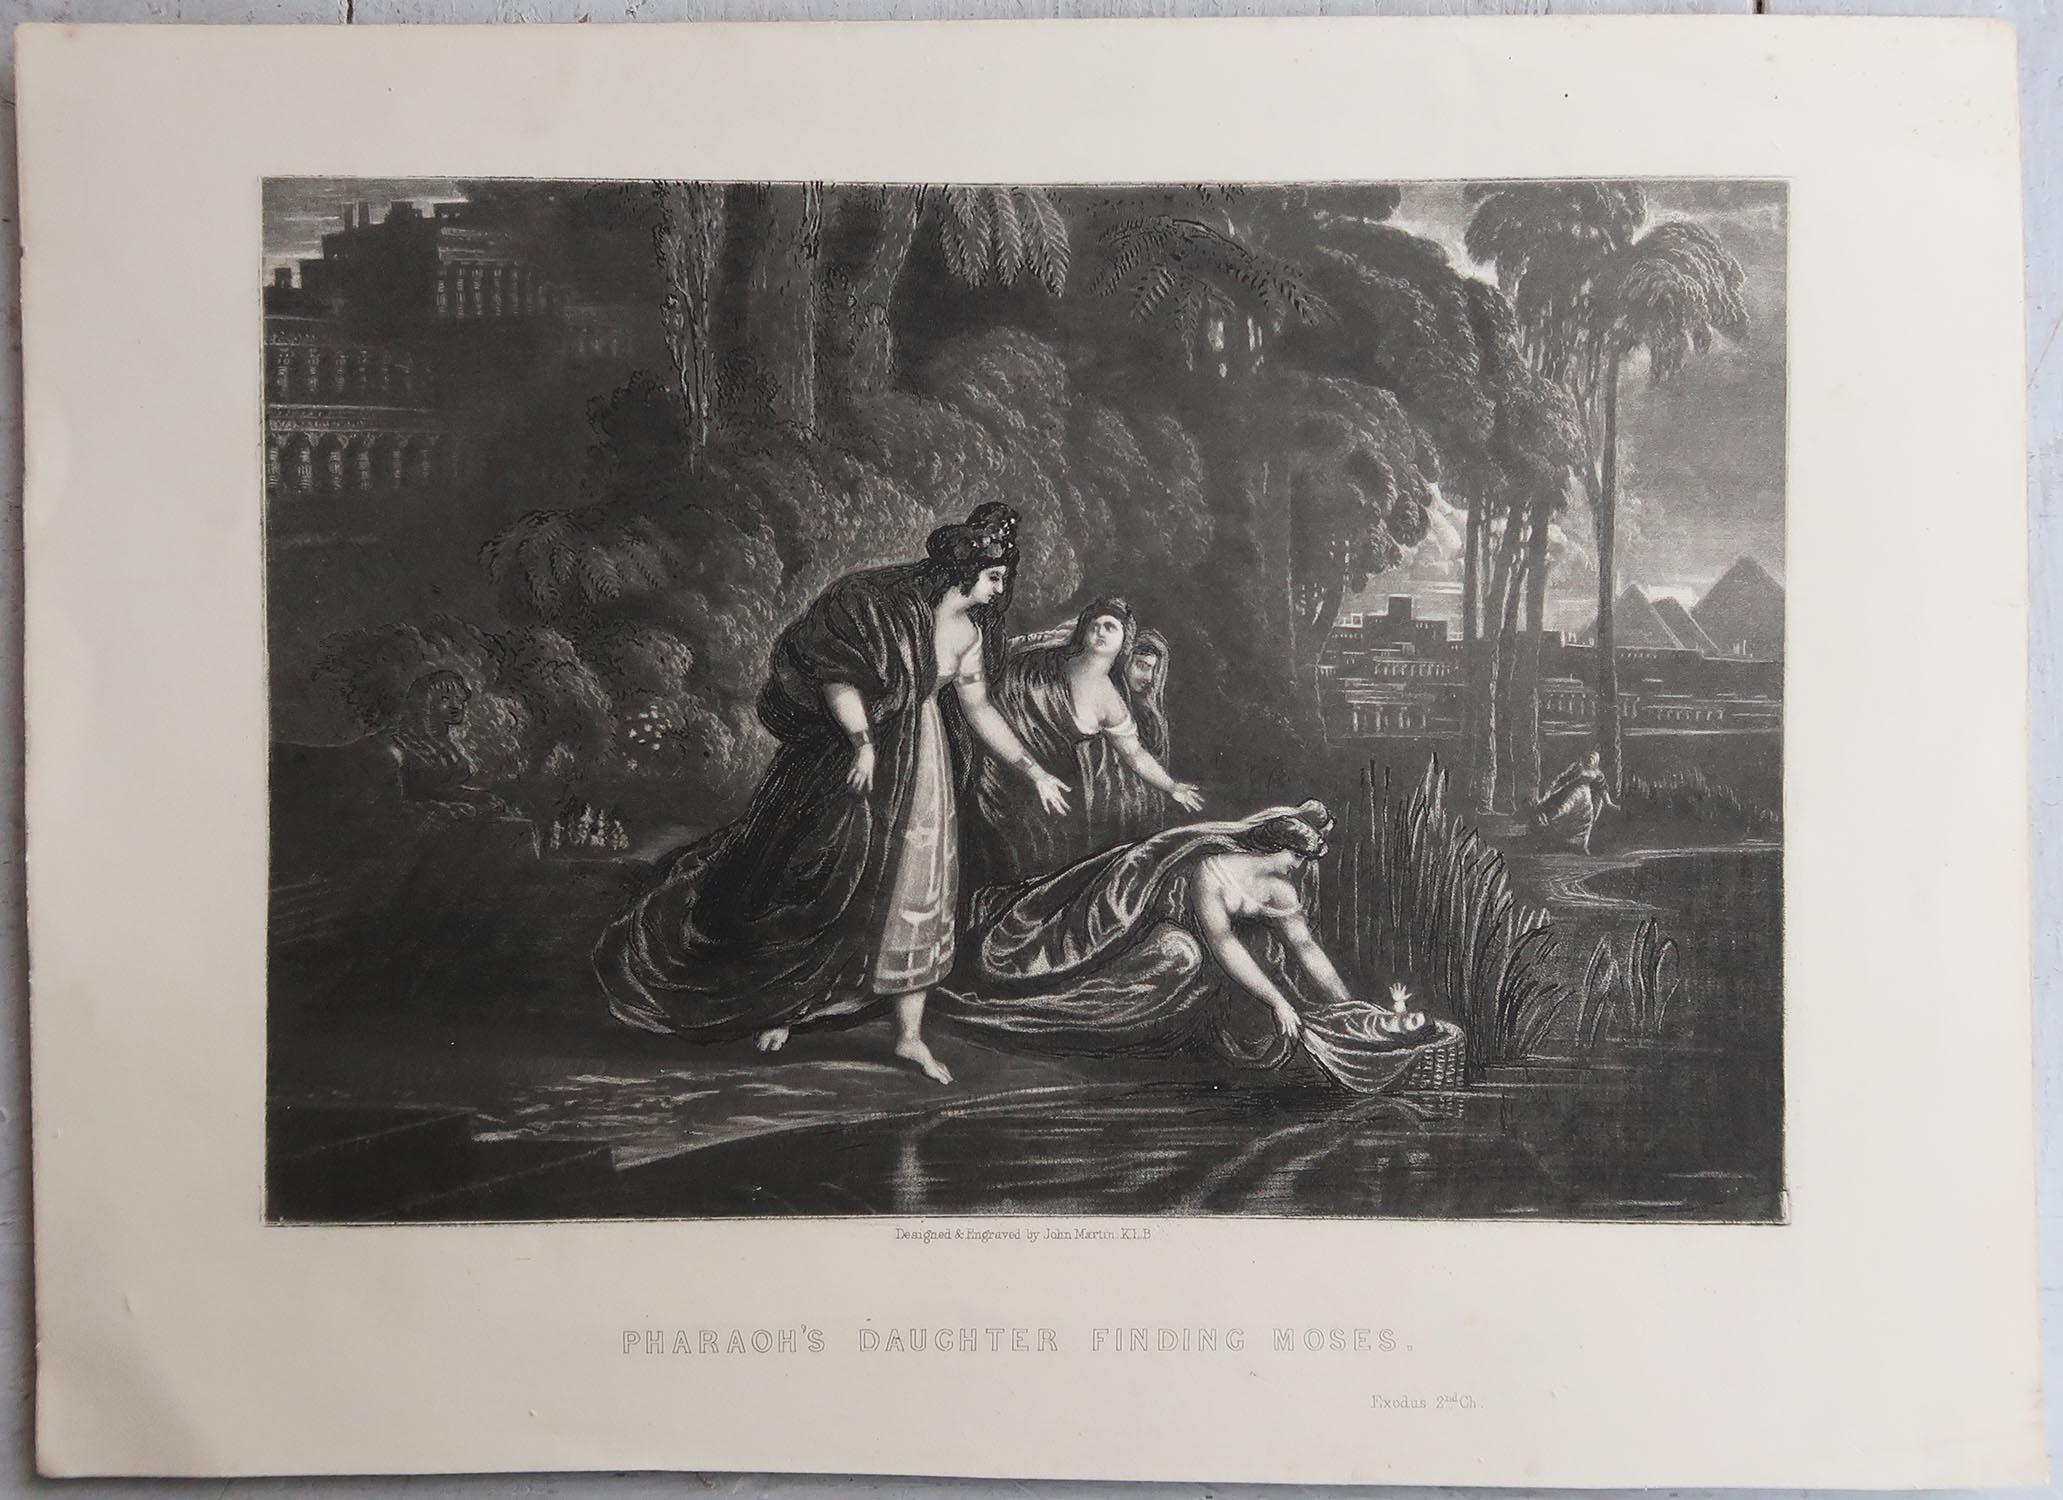 Romantic Mezzotint by John Martin, Pharaoh's Daughter Finding Moses, Sangster, C.1850